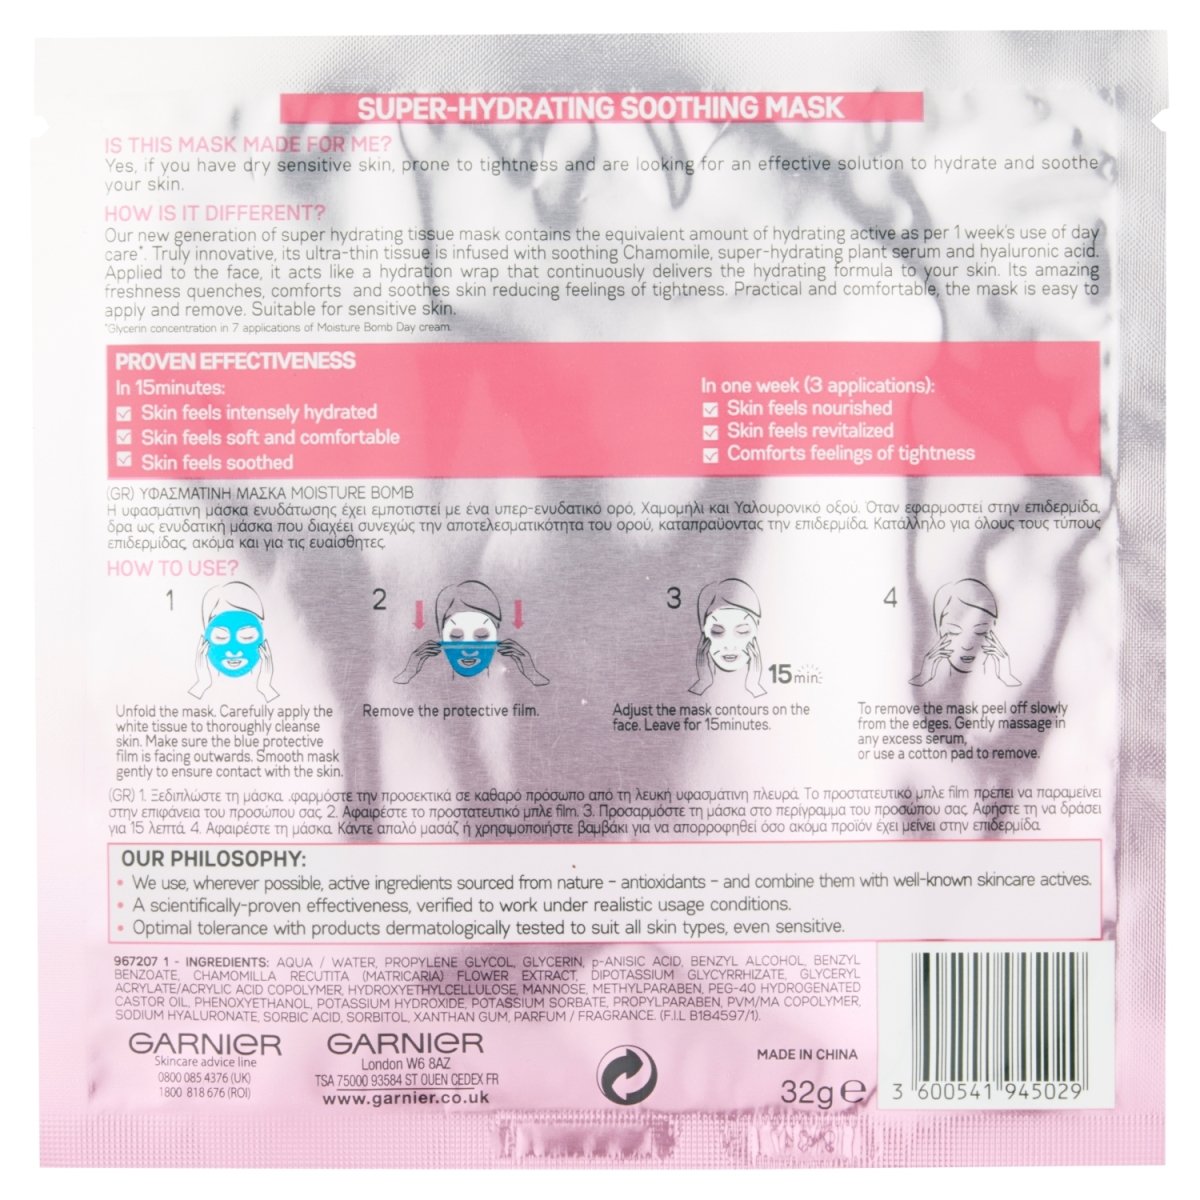 Garnier Moisture Bomb Tissue Mask (Dry & Sensitive Skin - Chamomile Extract) - Intamarque - Wholesale 3600541945029